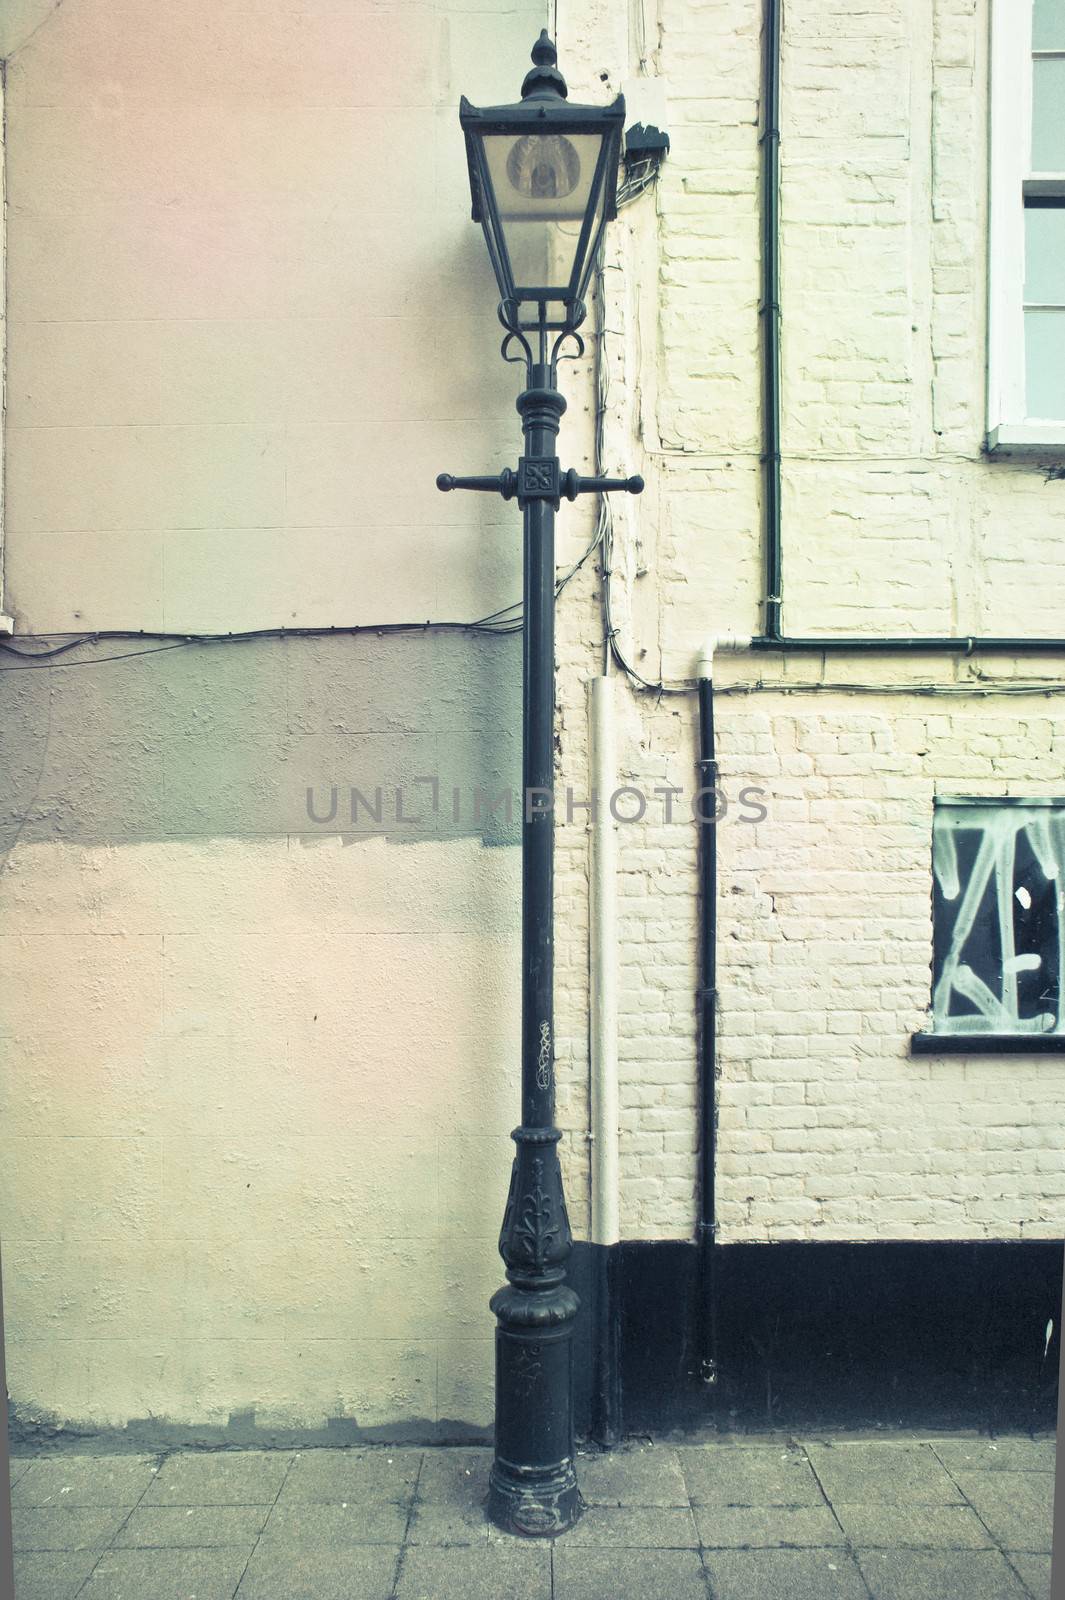 Vintage lamp post against an urban wall